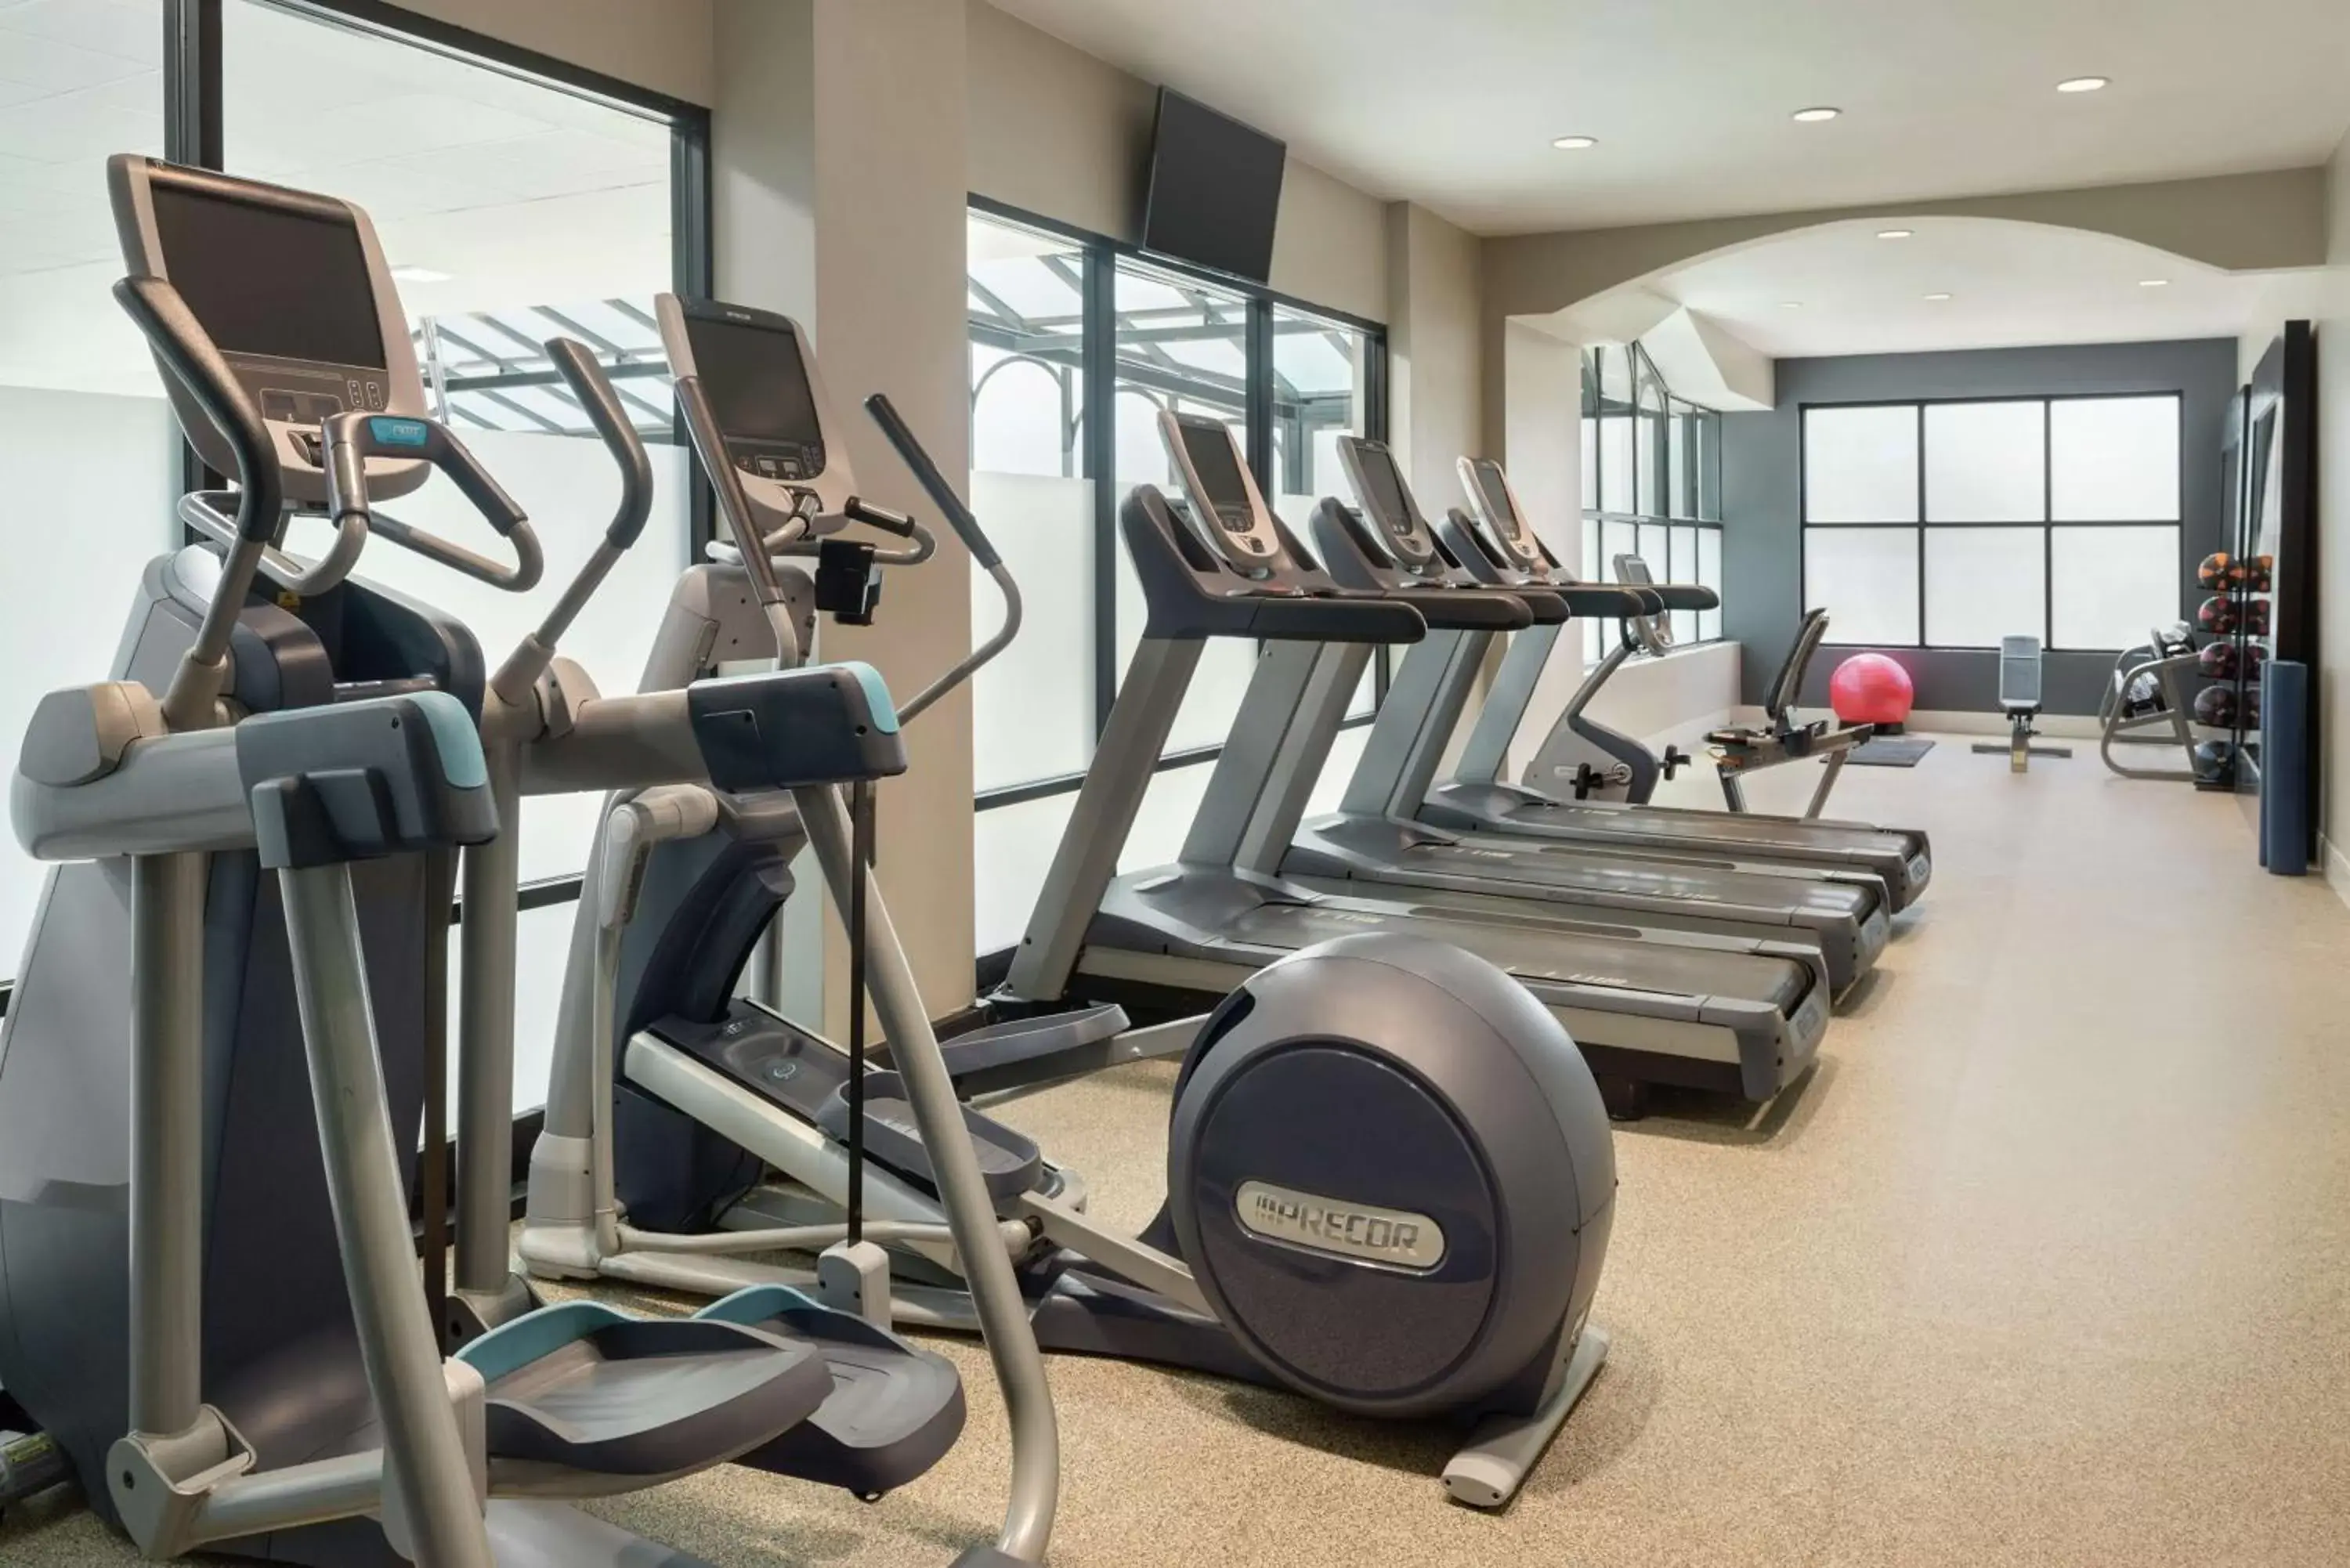 Fitness centre/facilities, Fitness Center/Facilities in Embassy Suites by Hilton Atlanta Alpharetta